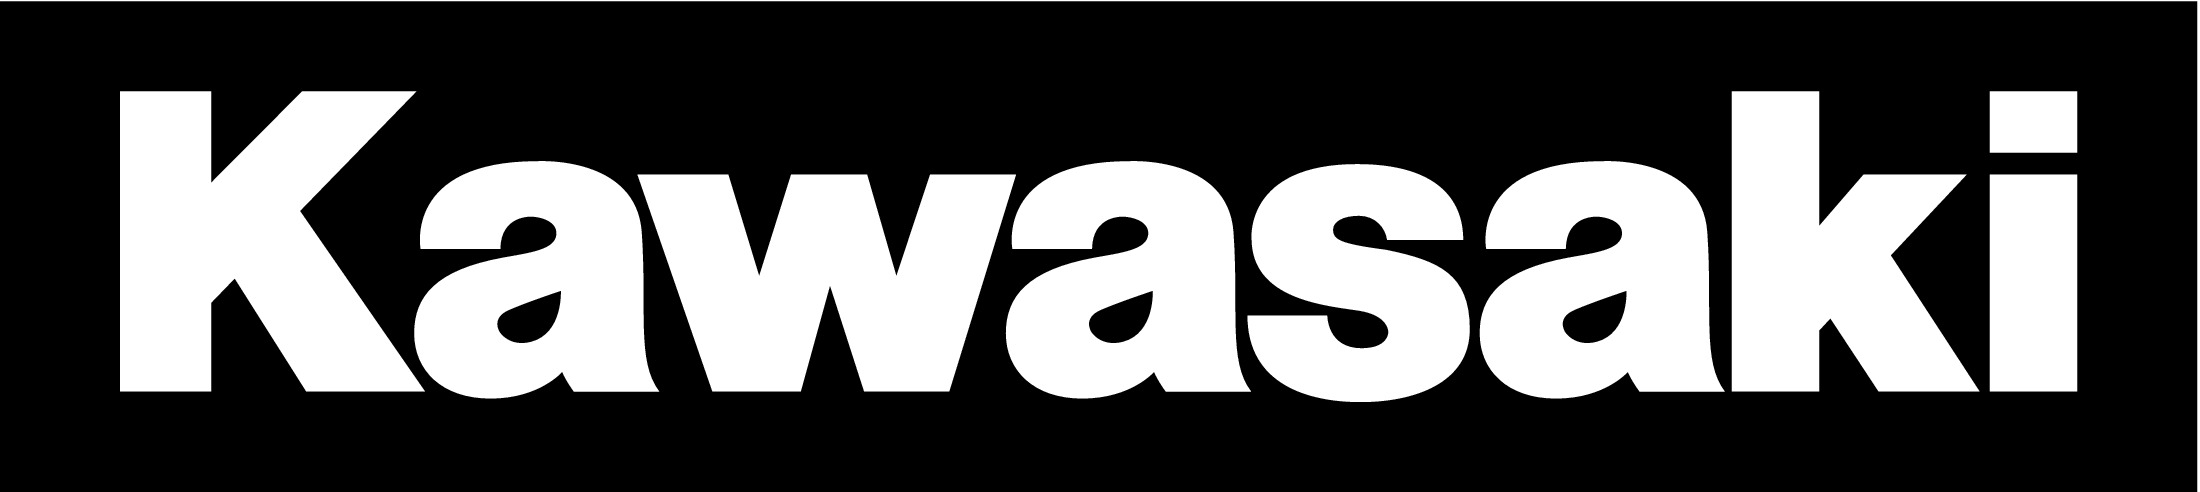 Kawasaki logo on black background